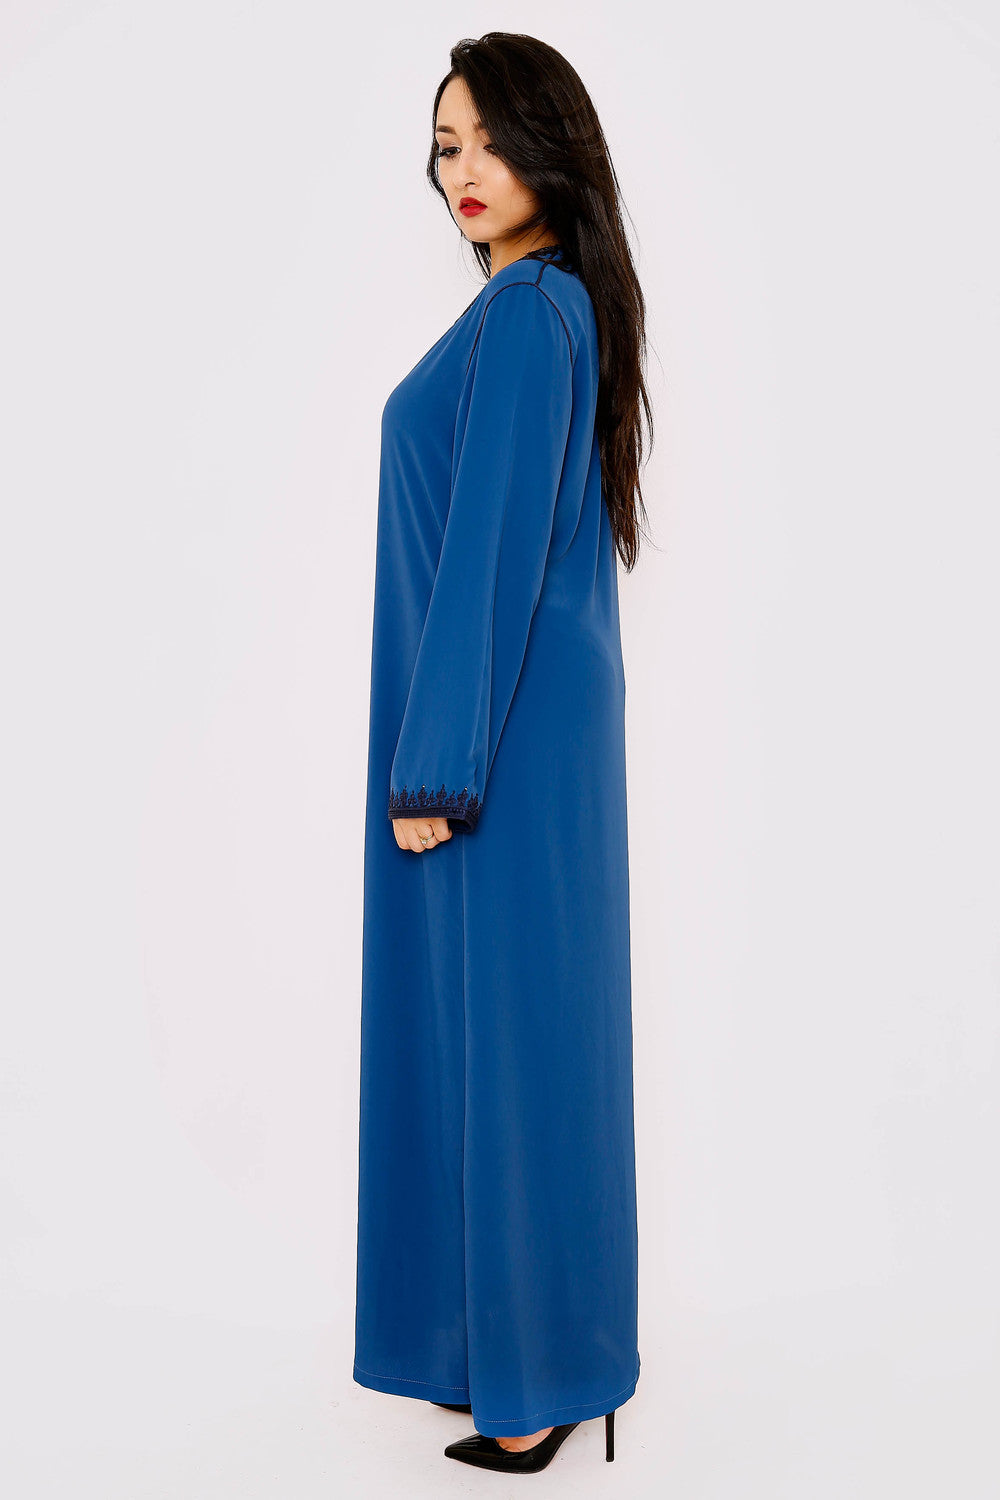 Kmiss Amani Long Sleeve V Neck Loose Maxi Dress Kaftan in Blue